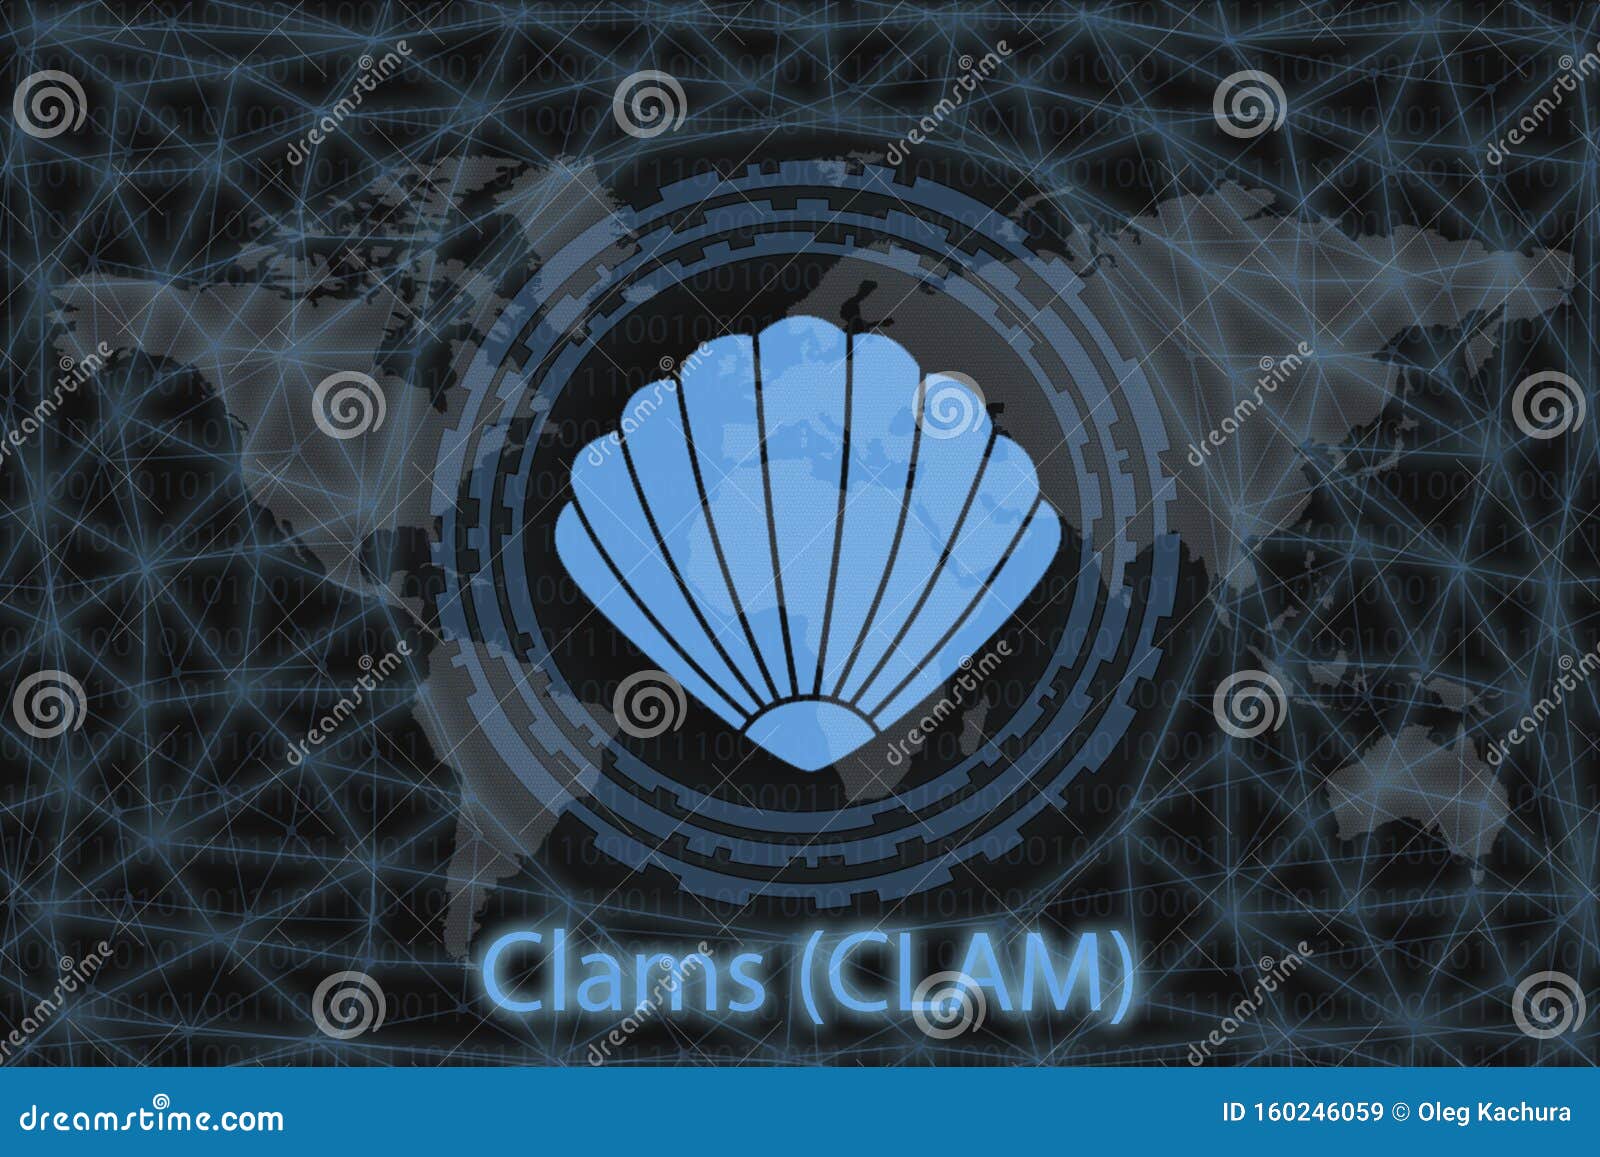 clams crypto exchange